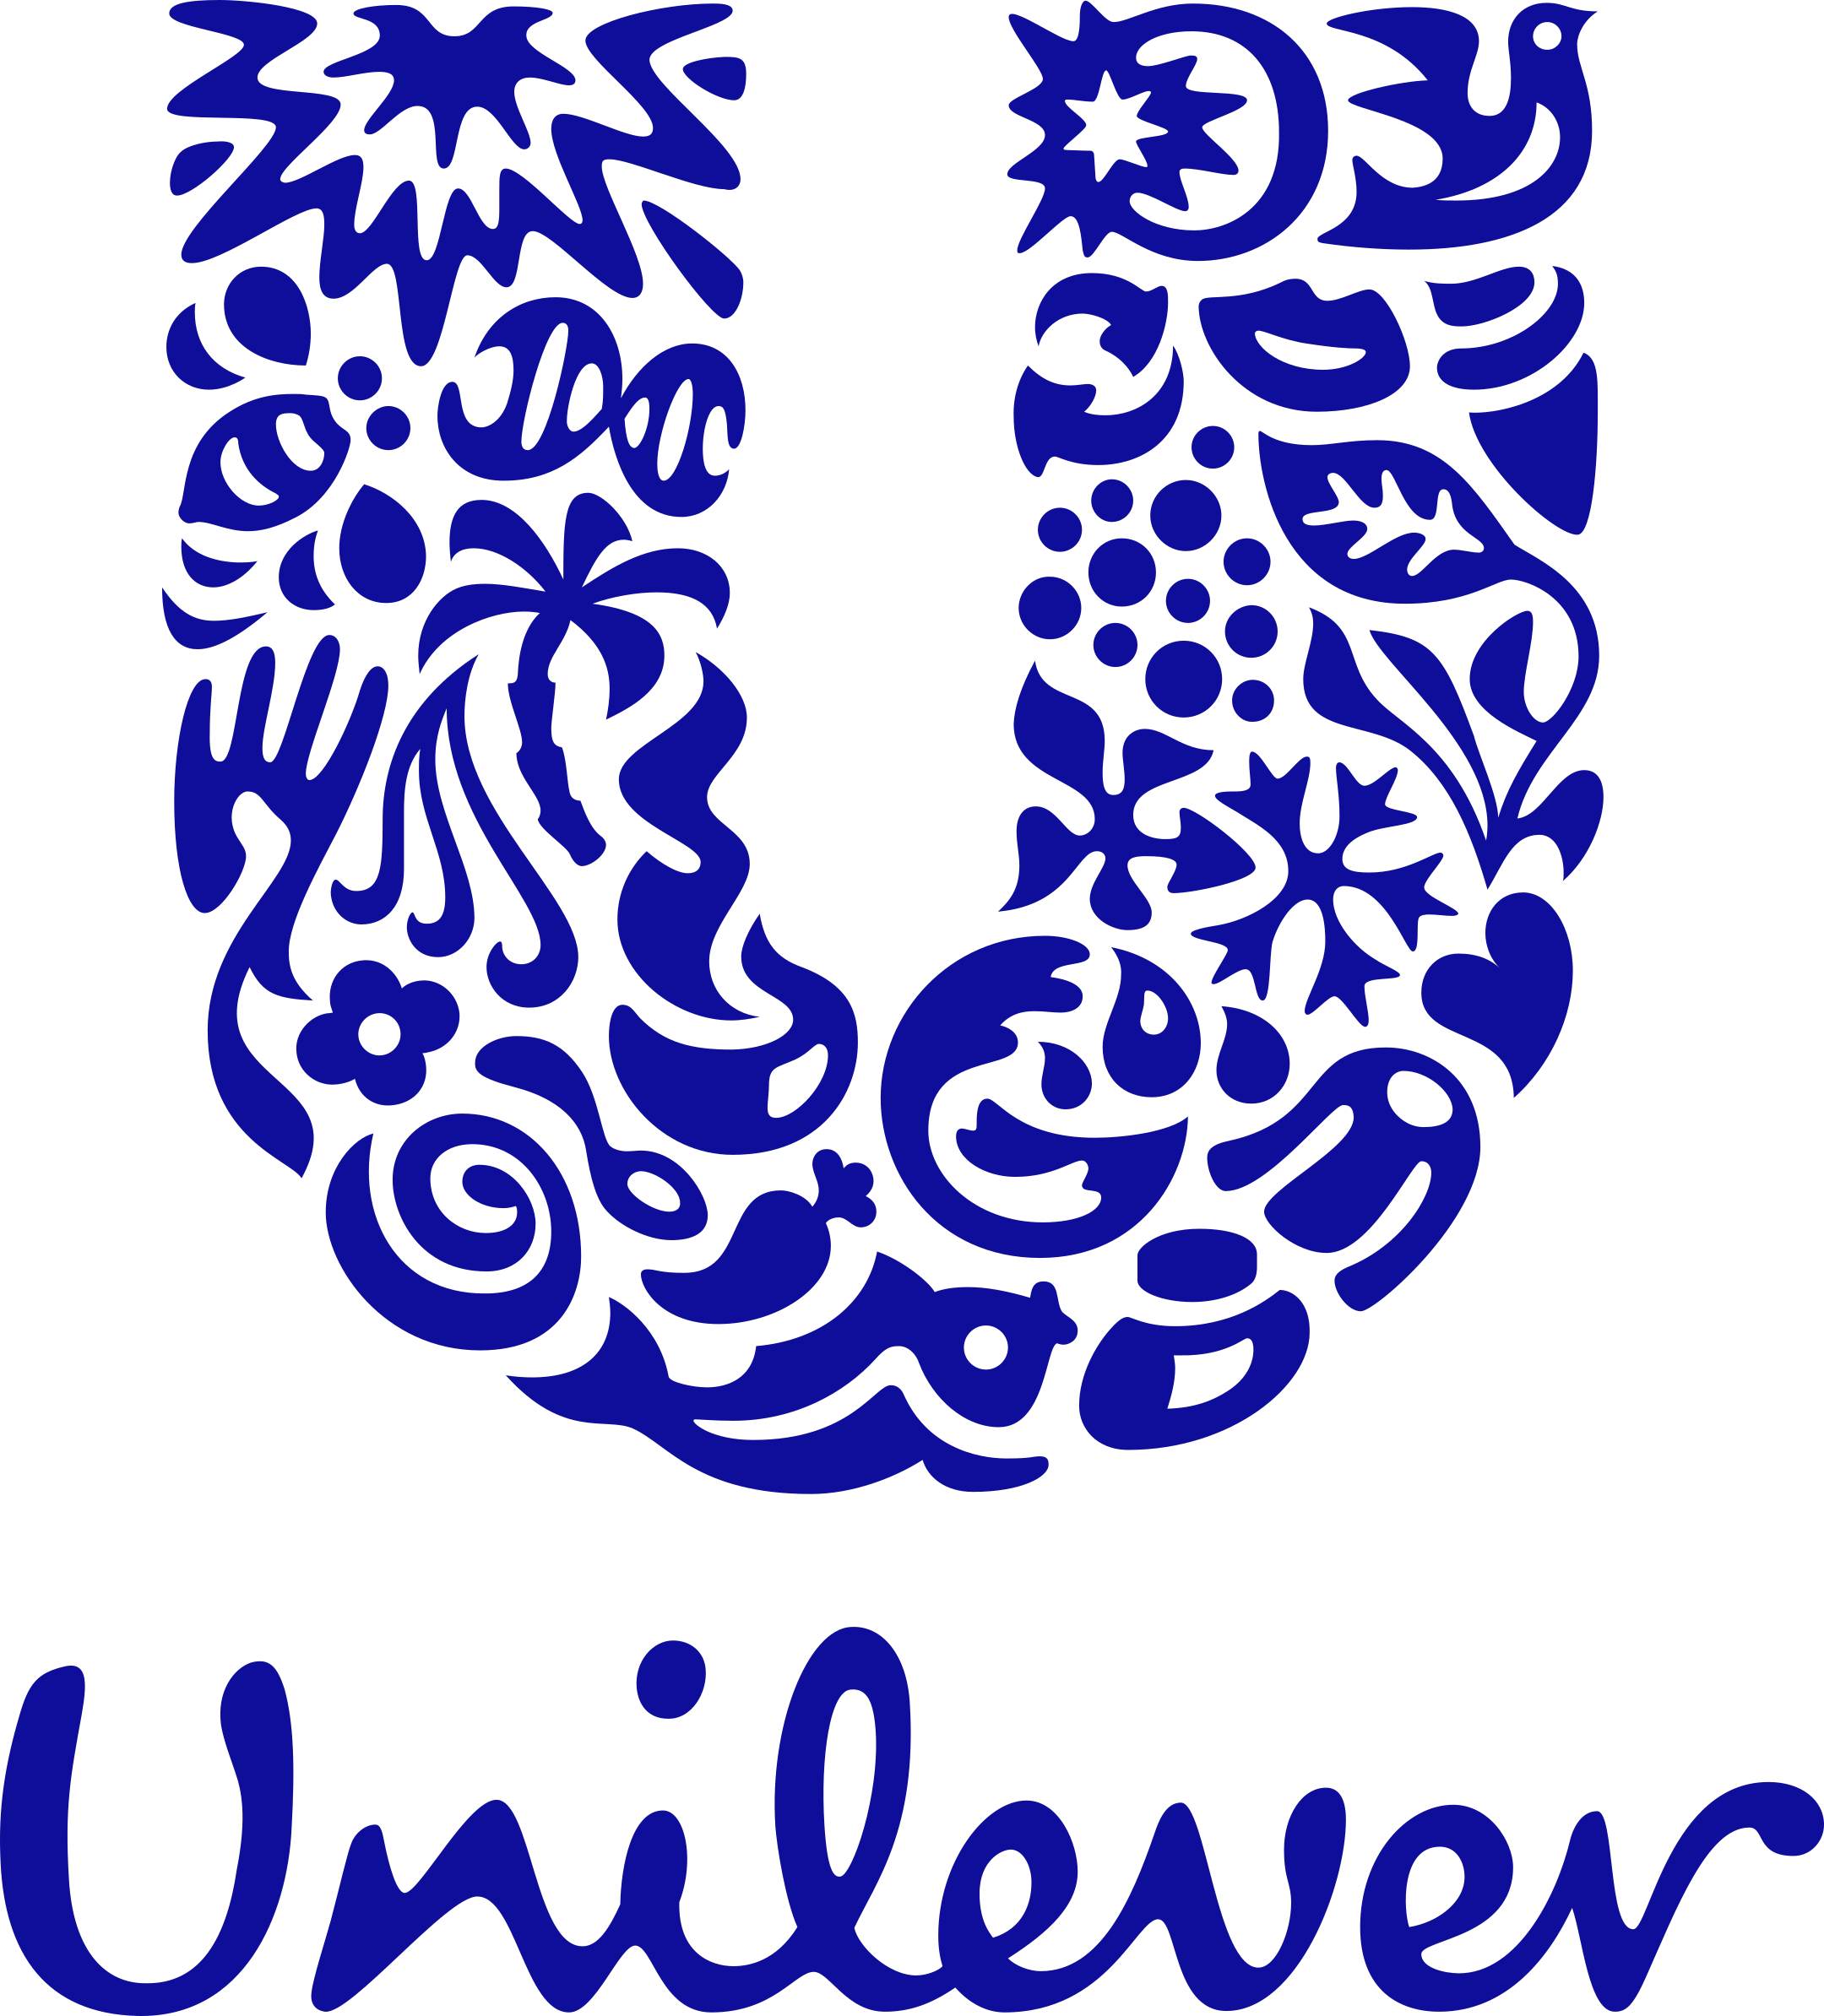 Unilever México